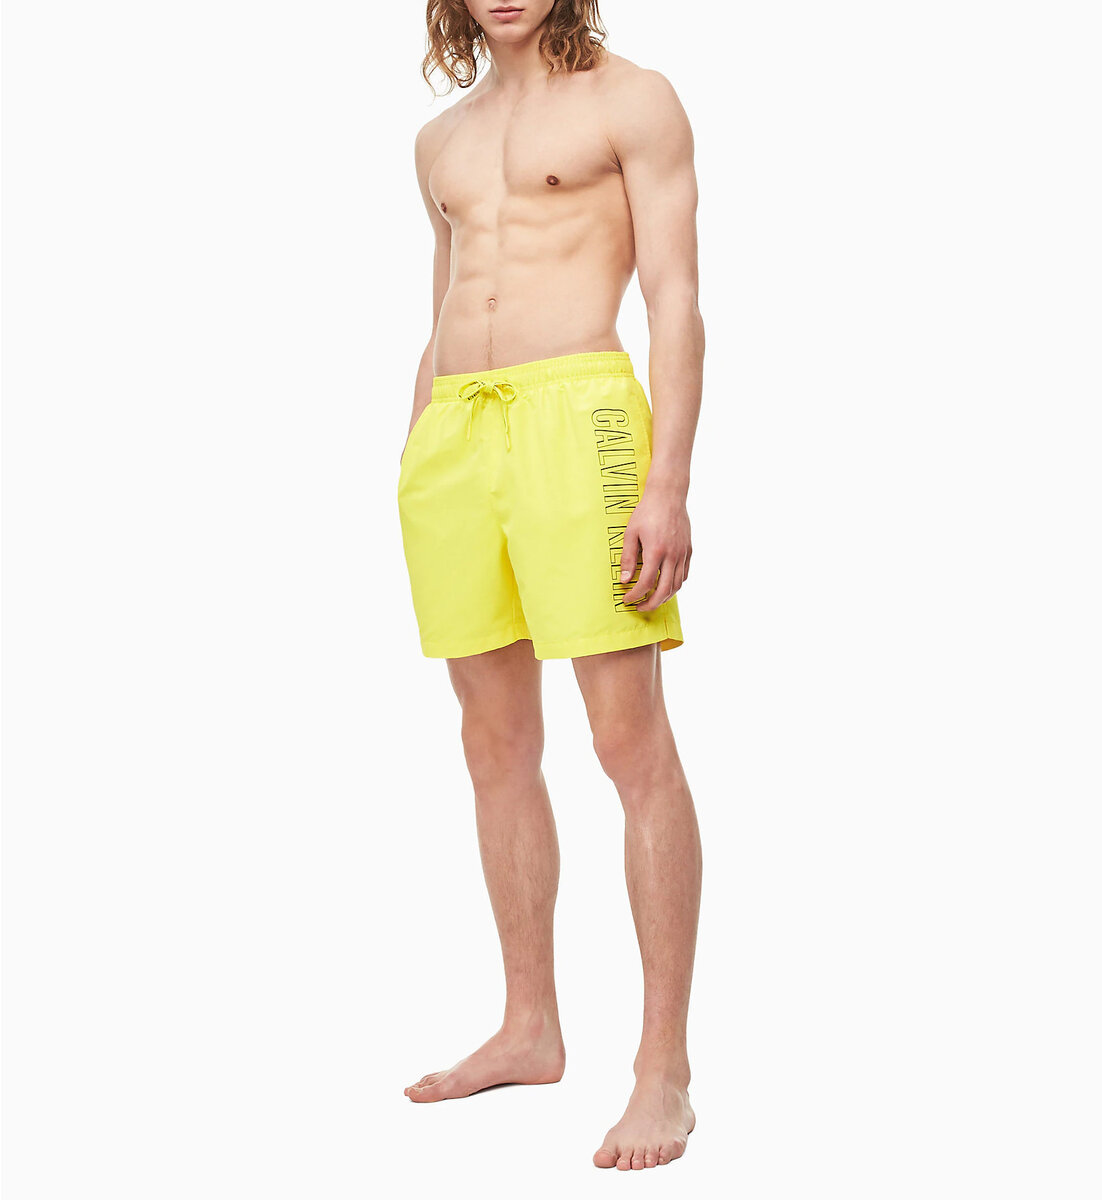 Pánské plavecké šortky 95Z71C žlutá - Calvin Klein, Žlutá M i10_P37328_1:88_2:91_